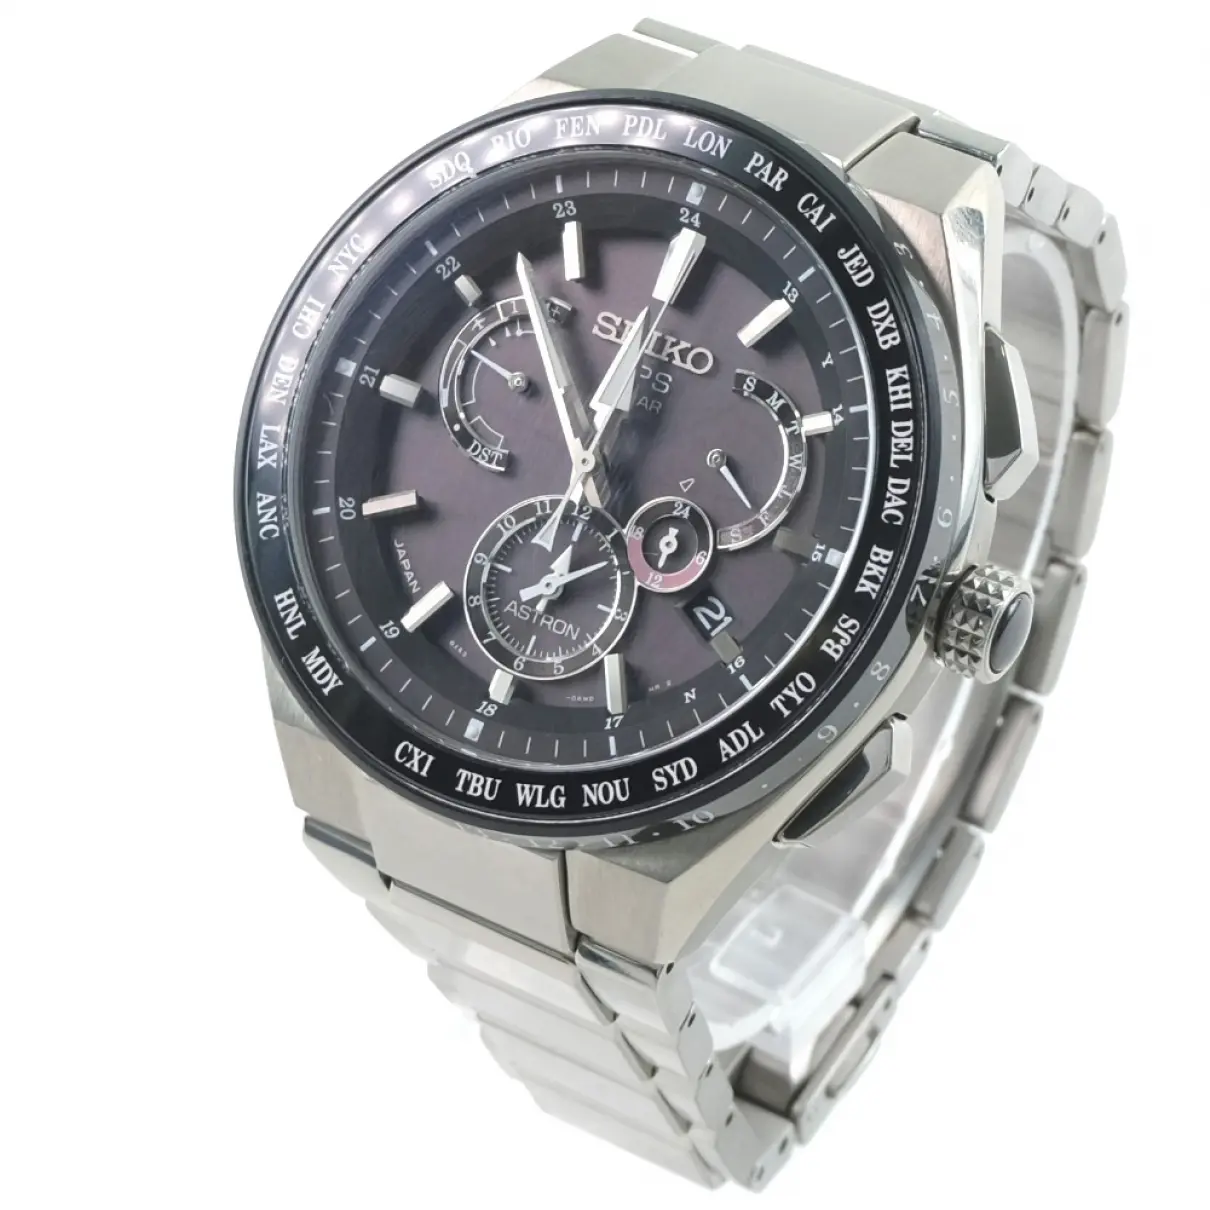 Buy SEIKO Ceramic watch online